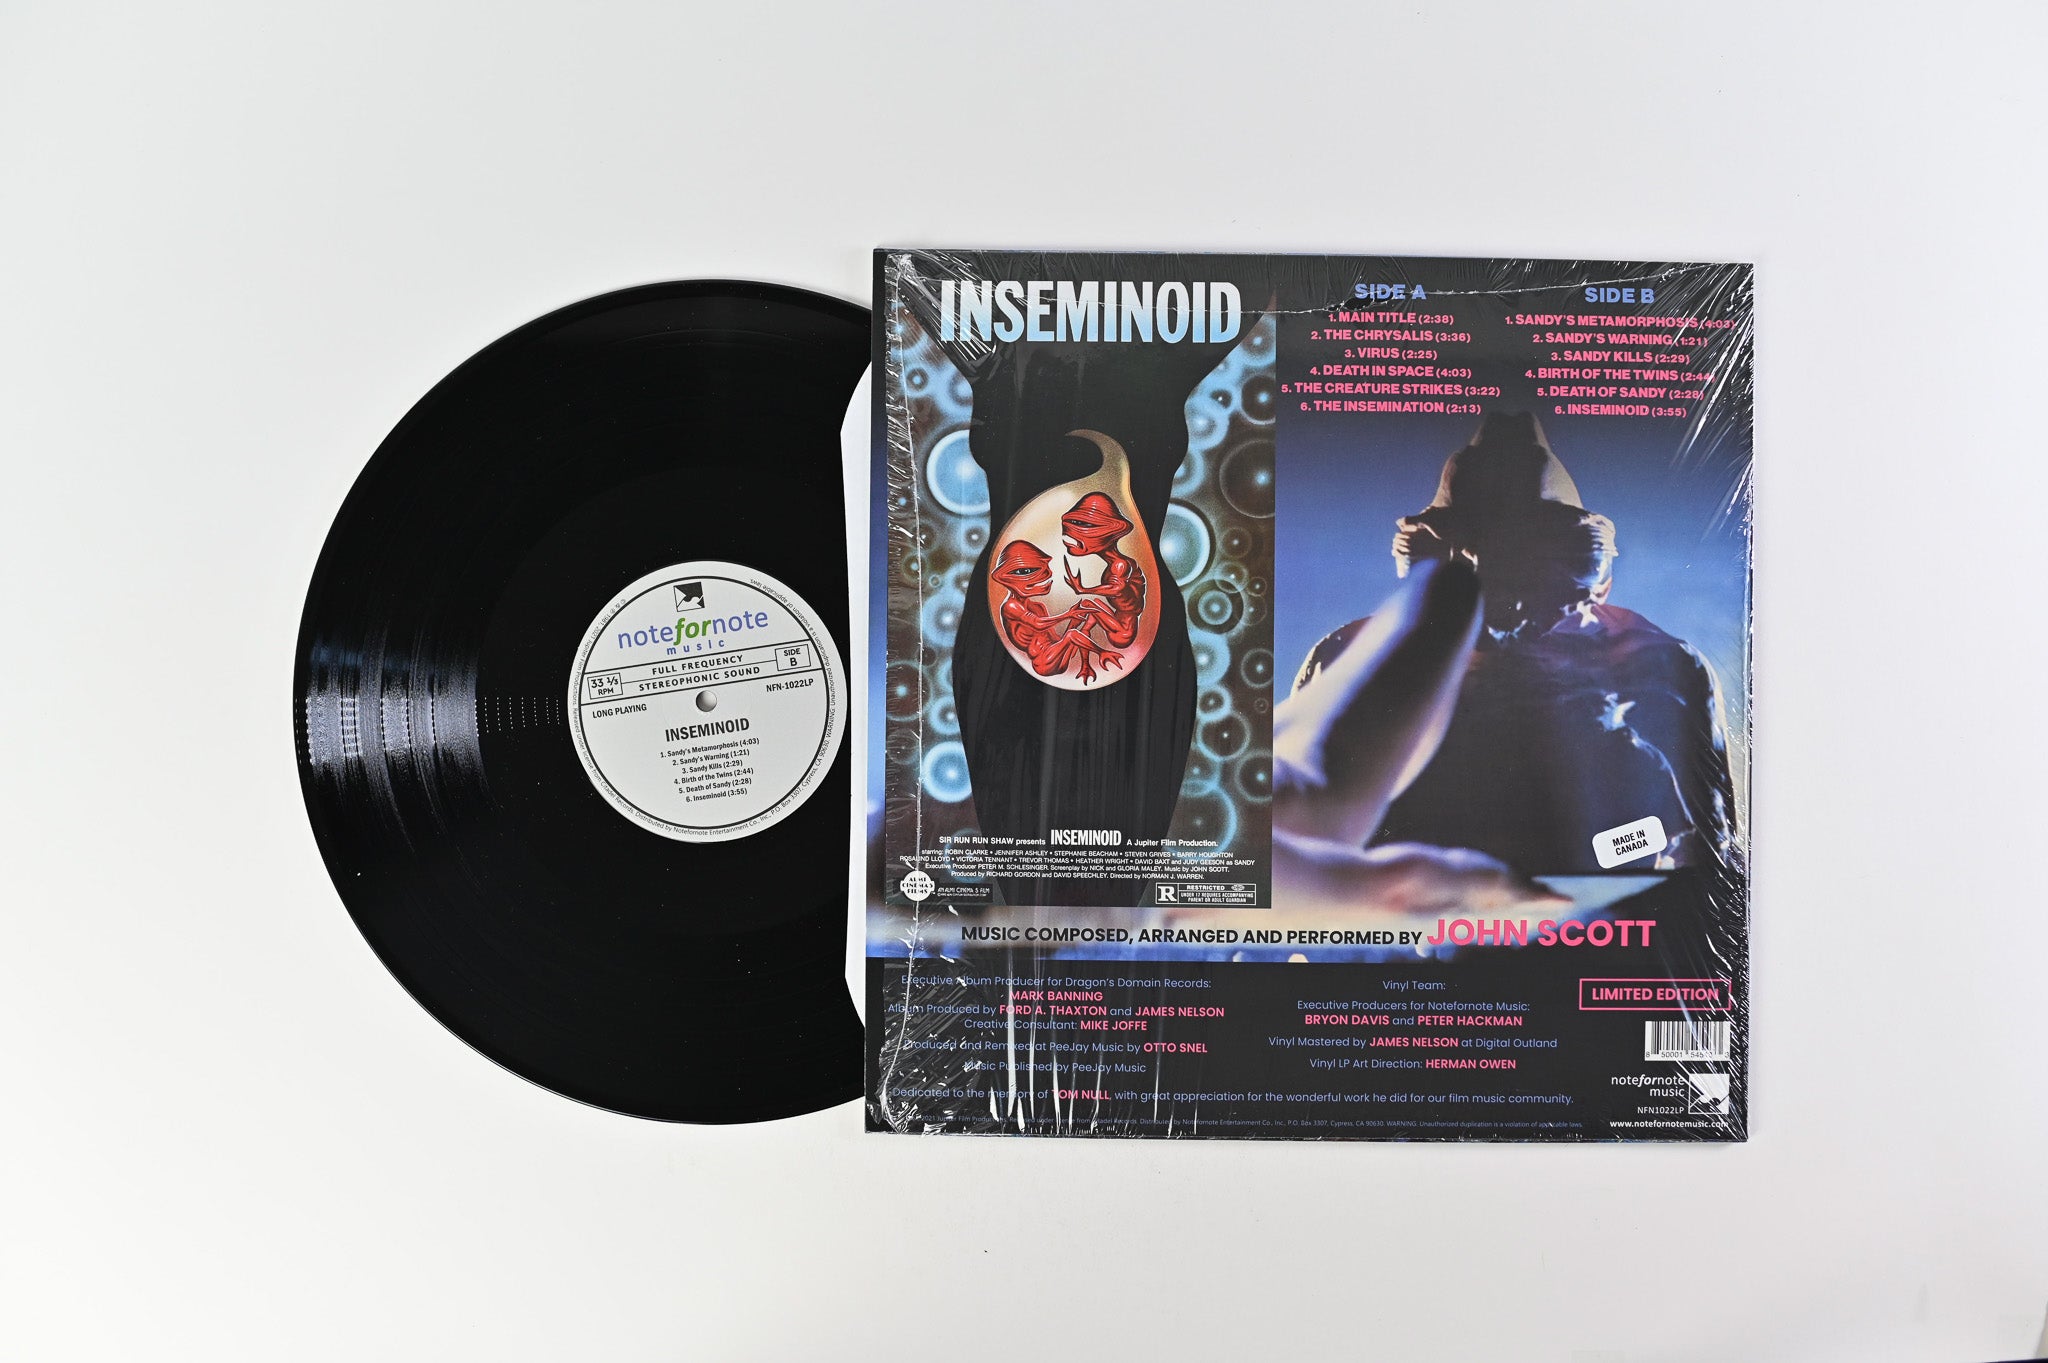 John Scott - Inseminoid (Original Motion Picture Soundtrack) on Notefornote Music